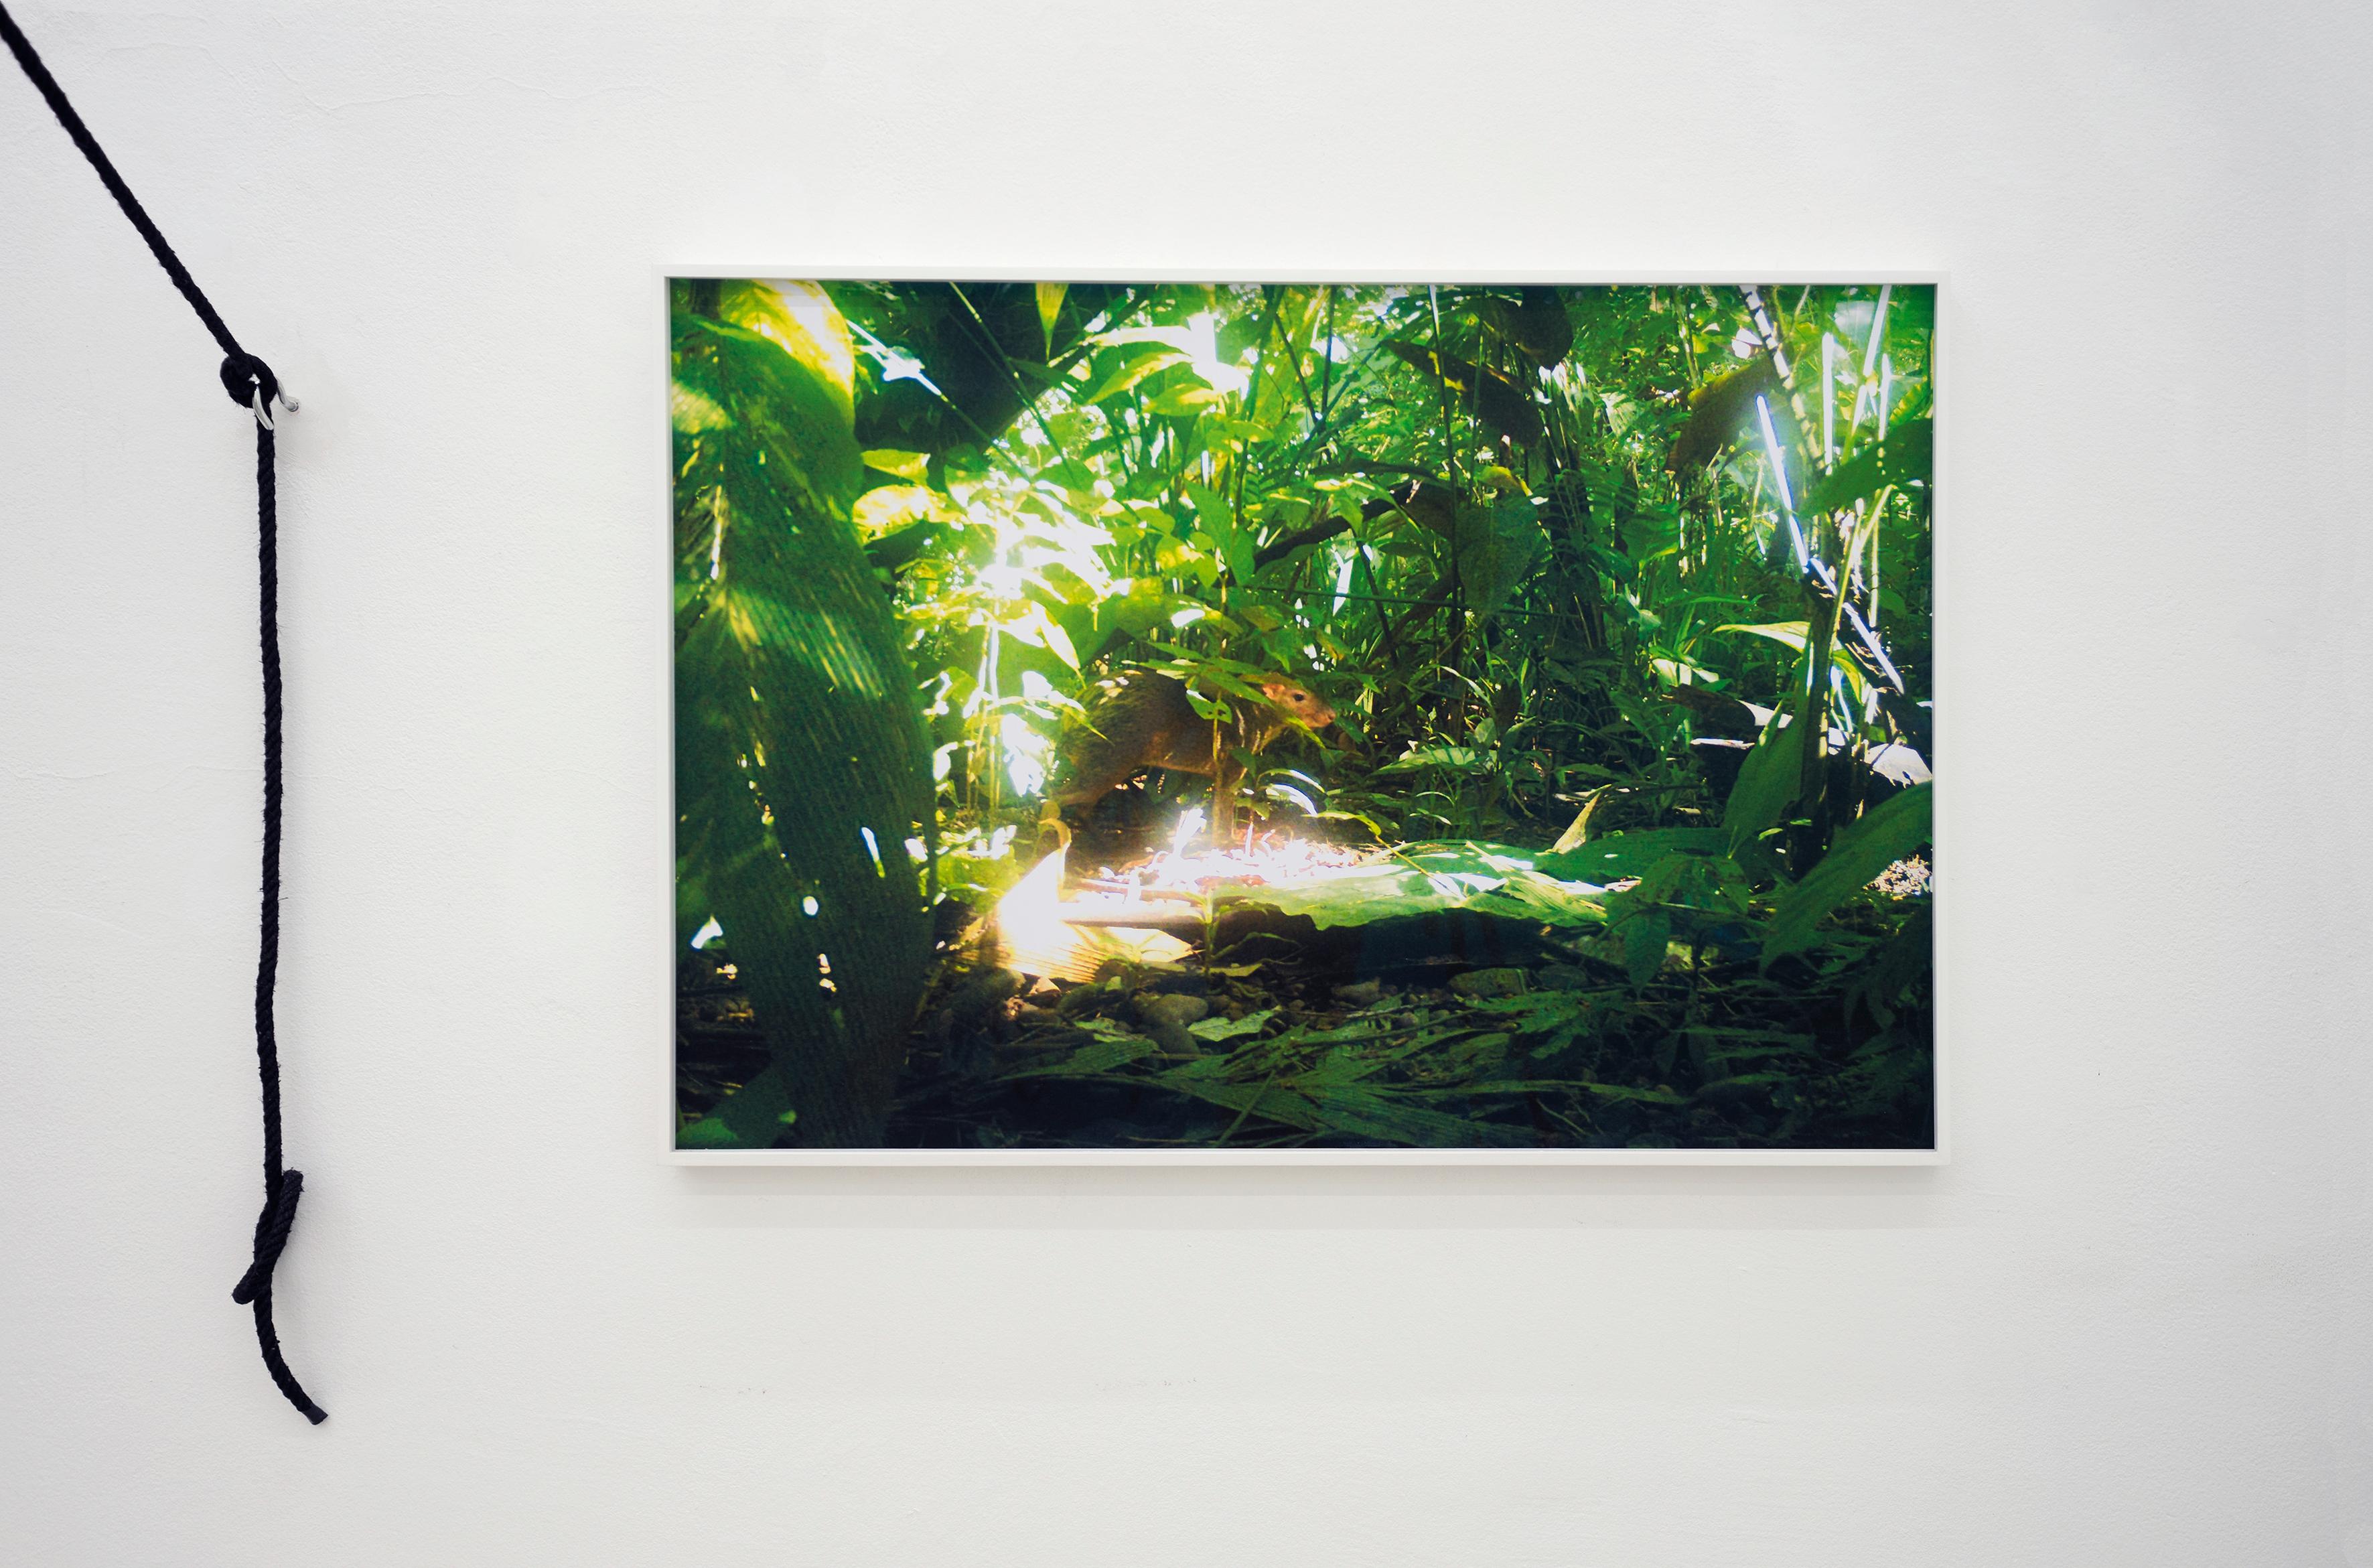 camera trap (Aguti) Ed. 2/3 - Contemporary Jungle Photography  2